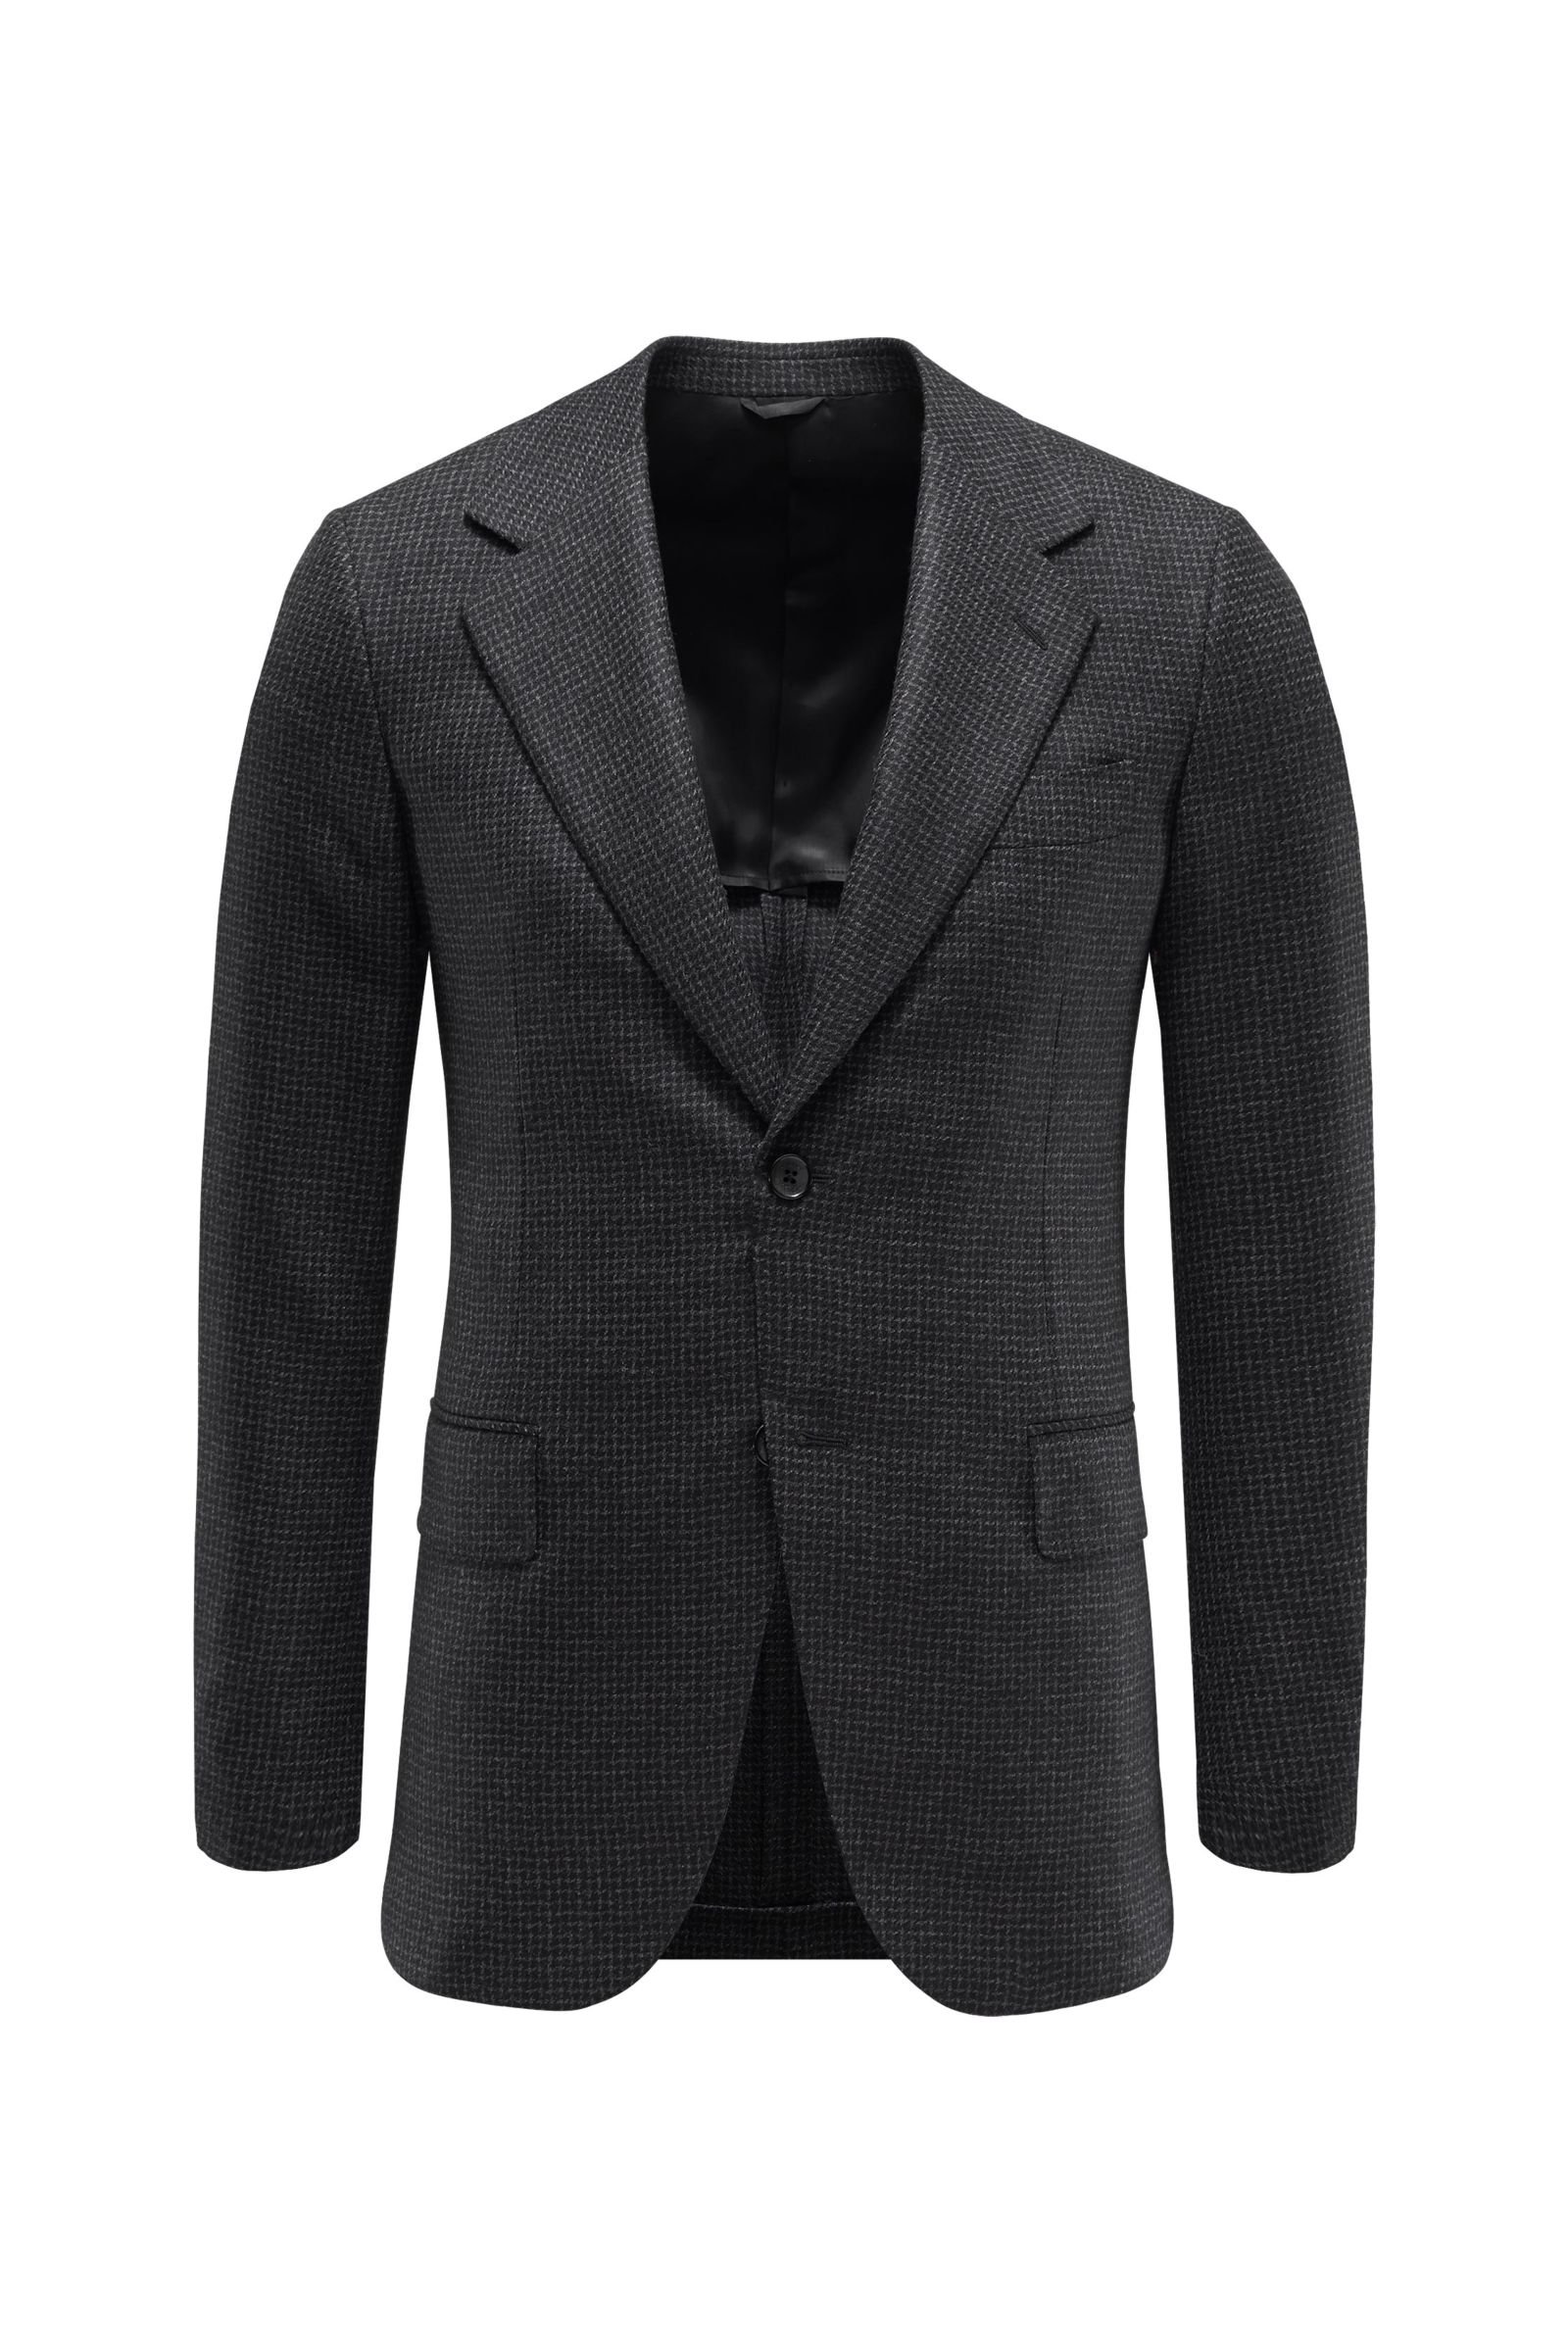 Smart-casual jacket black/grey checked